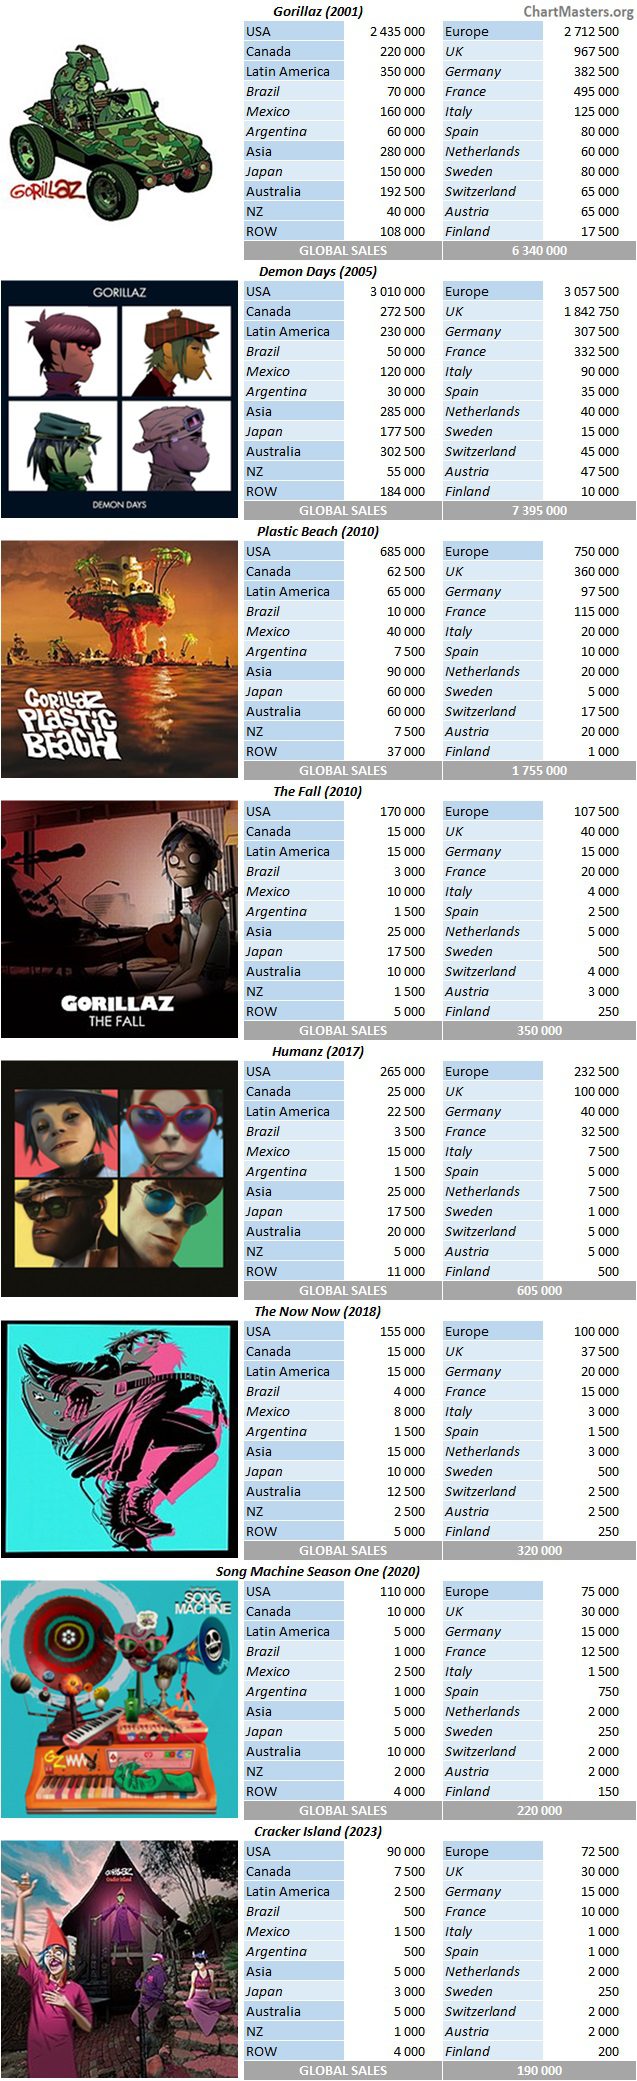 CSPC Gorillaz album sales breakdown